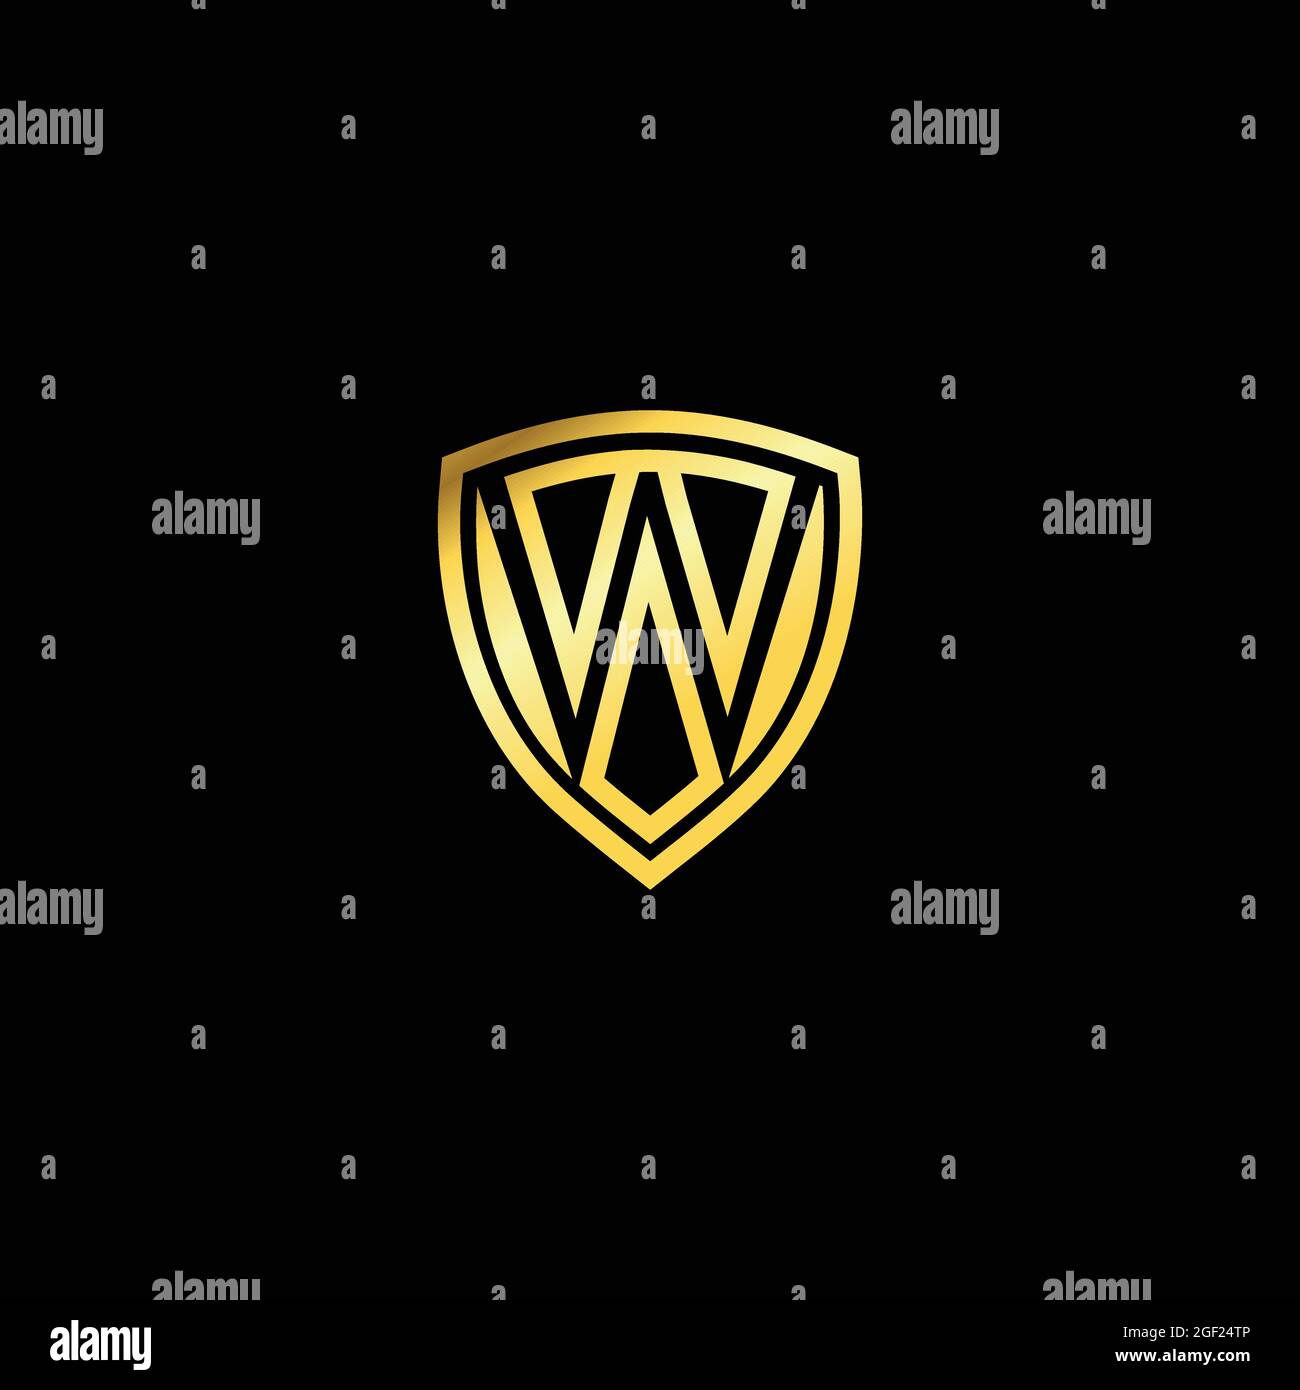 W letter emblem logo. Luxury gold shield design. Letter shield logo design concept template Stock Vector